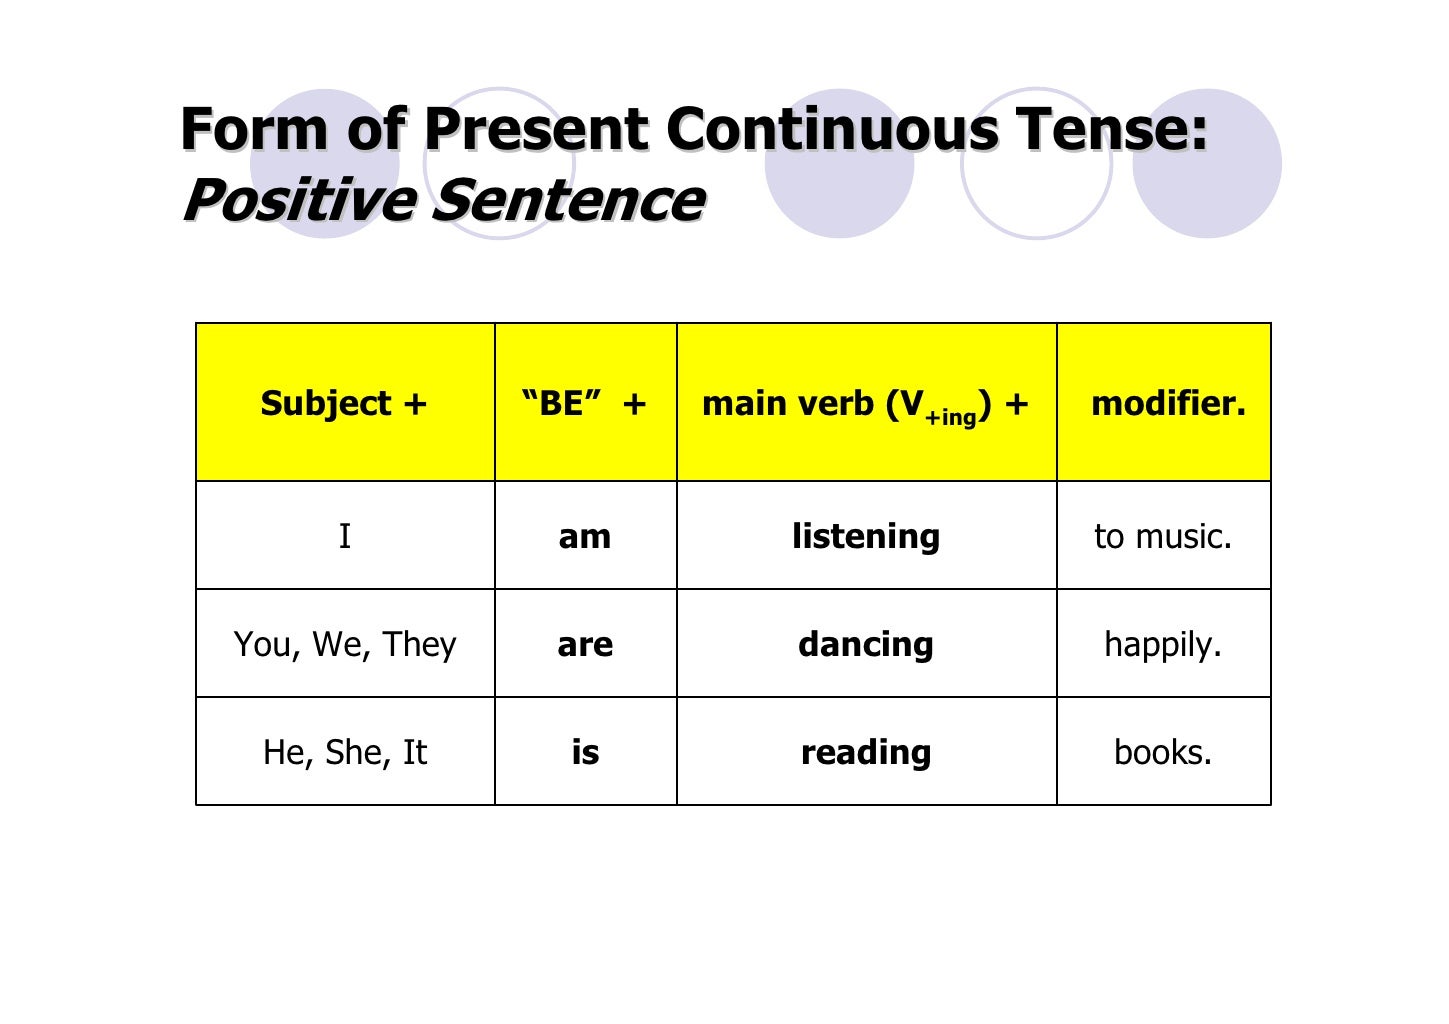 Present continuous 1 my book. Презент континиус affirmative. Present Continuous Tense. Present forms. Present Continuous Tense схема.